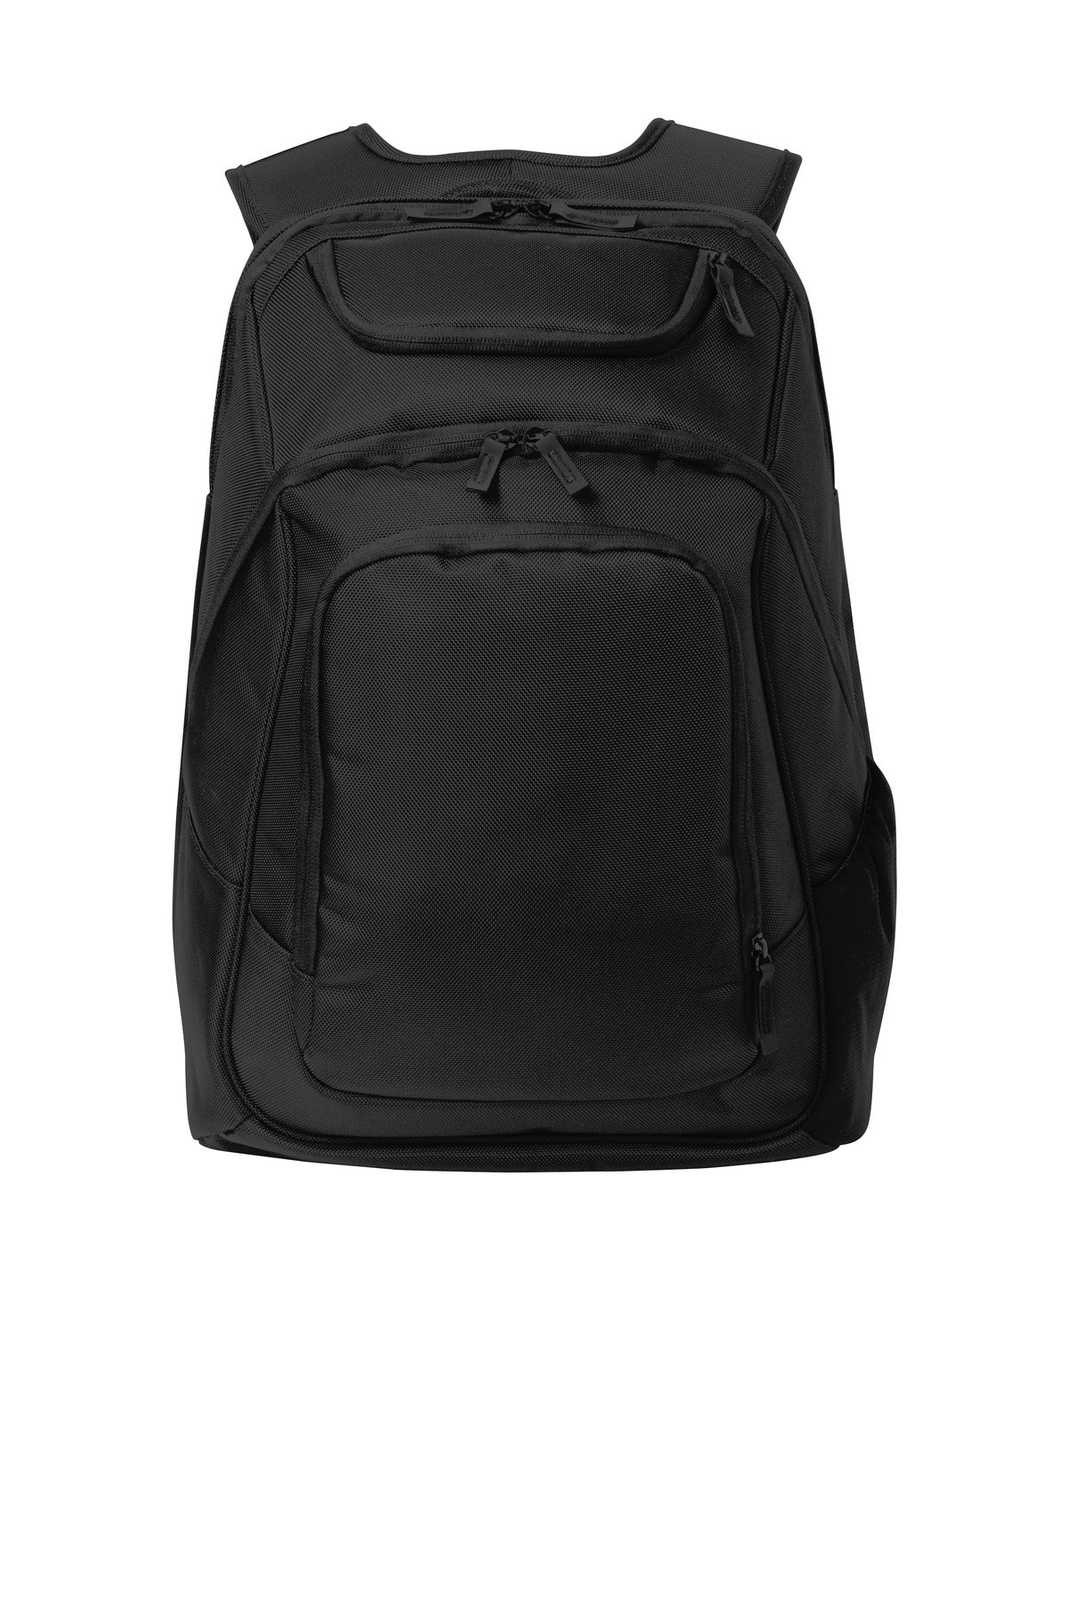 Port Authority BG223 Exec Backpack - Black - HIT a Double - 1